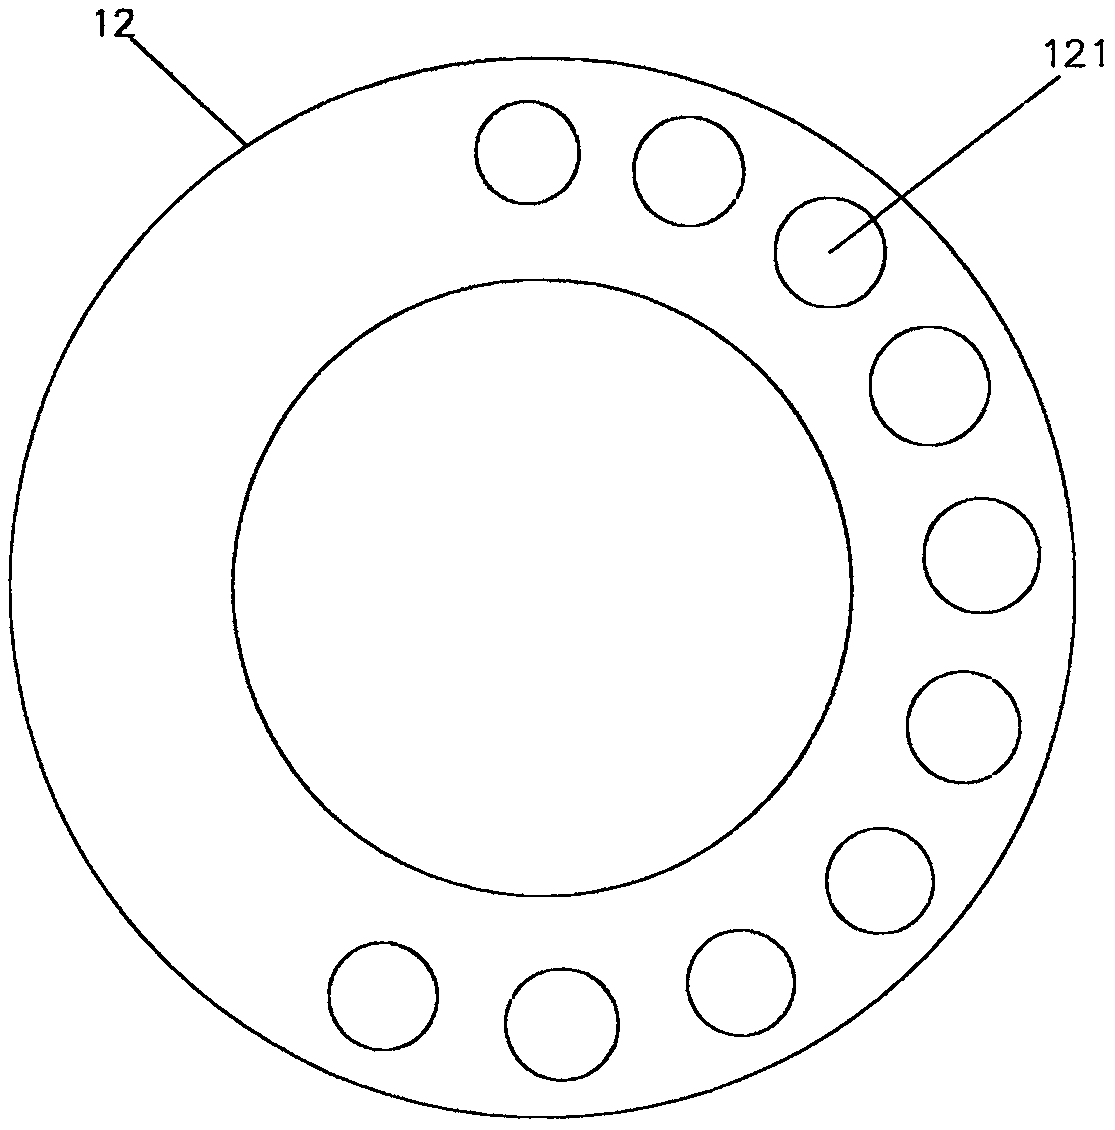 Three-dimensional code nut ring latch